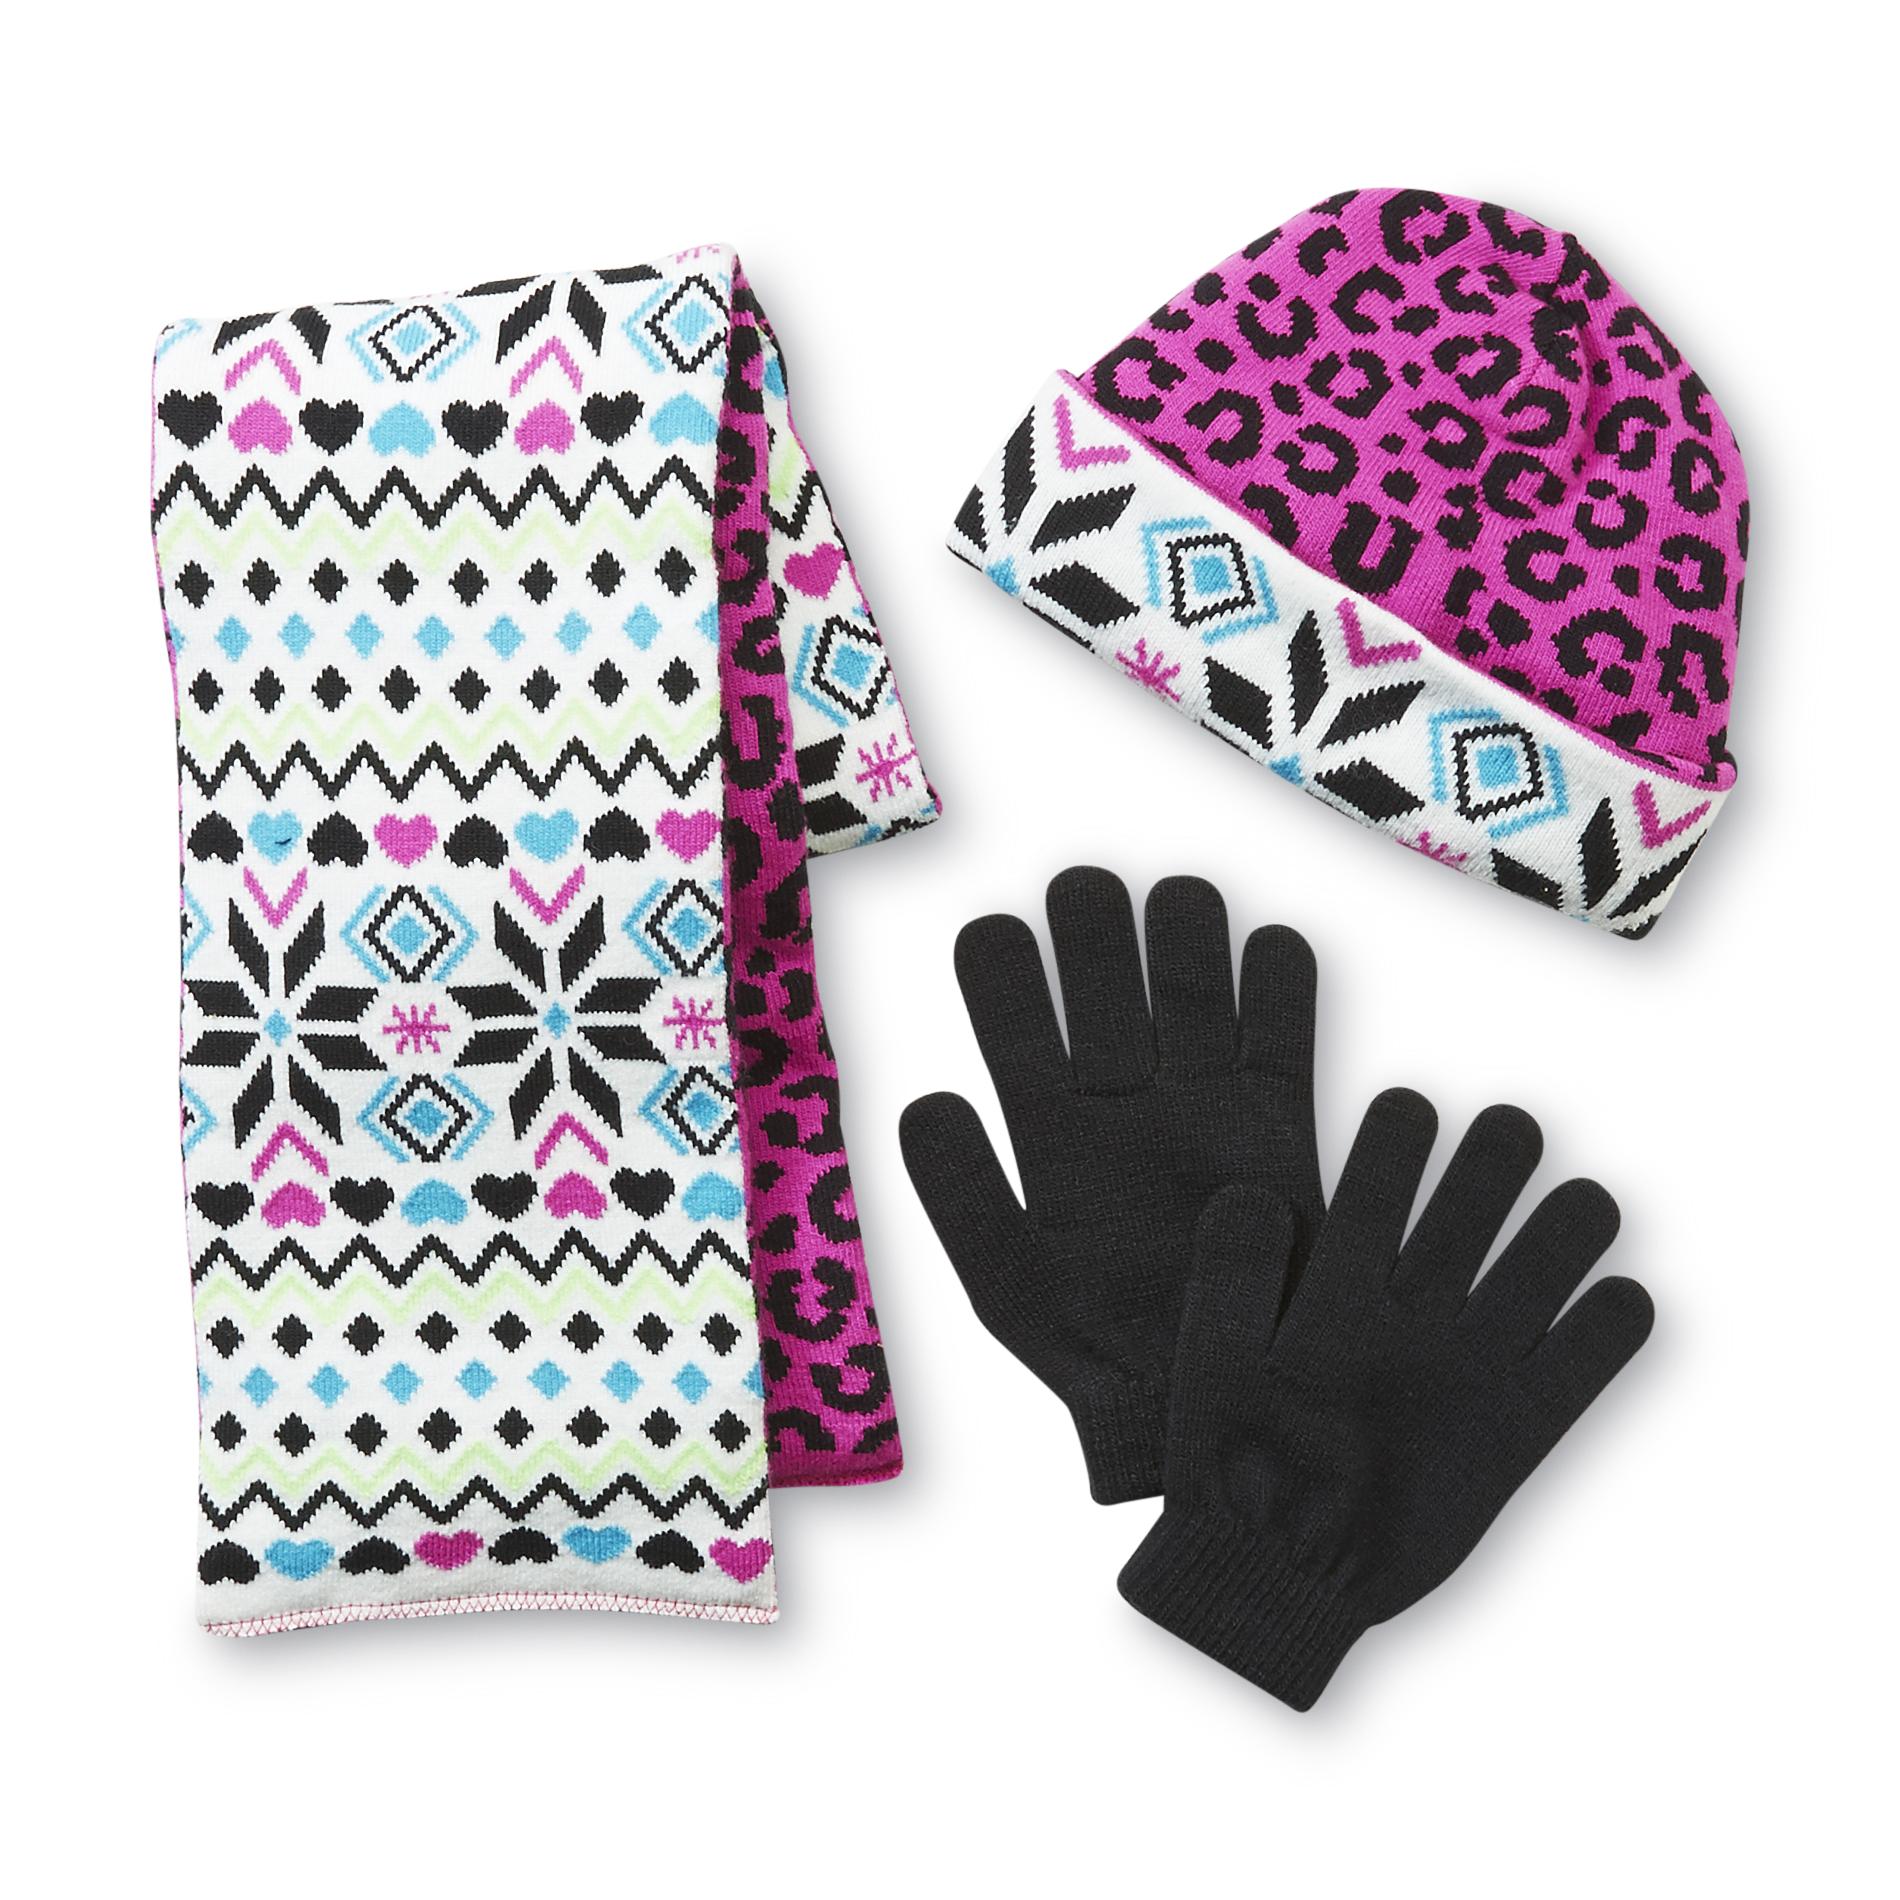 Athletech Girl's Gloves & Reversible Hat & Scarf - Leopard & Fair Isle